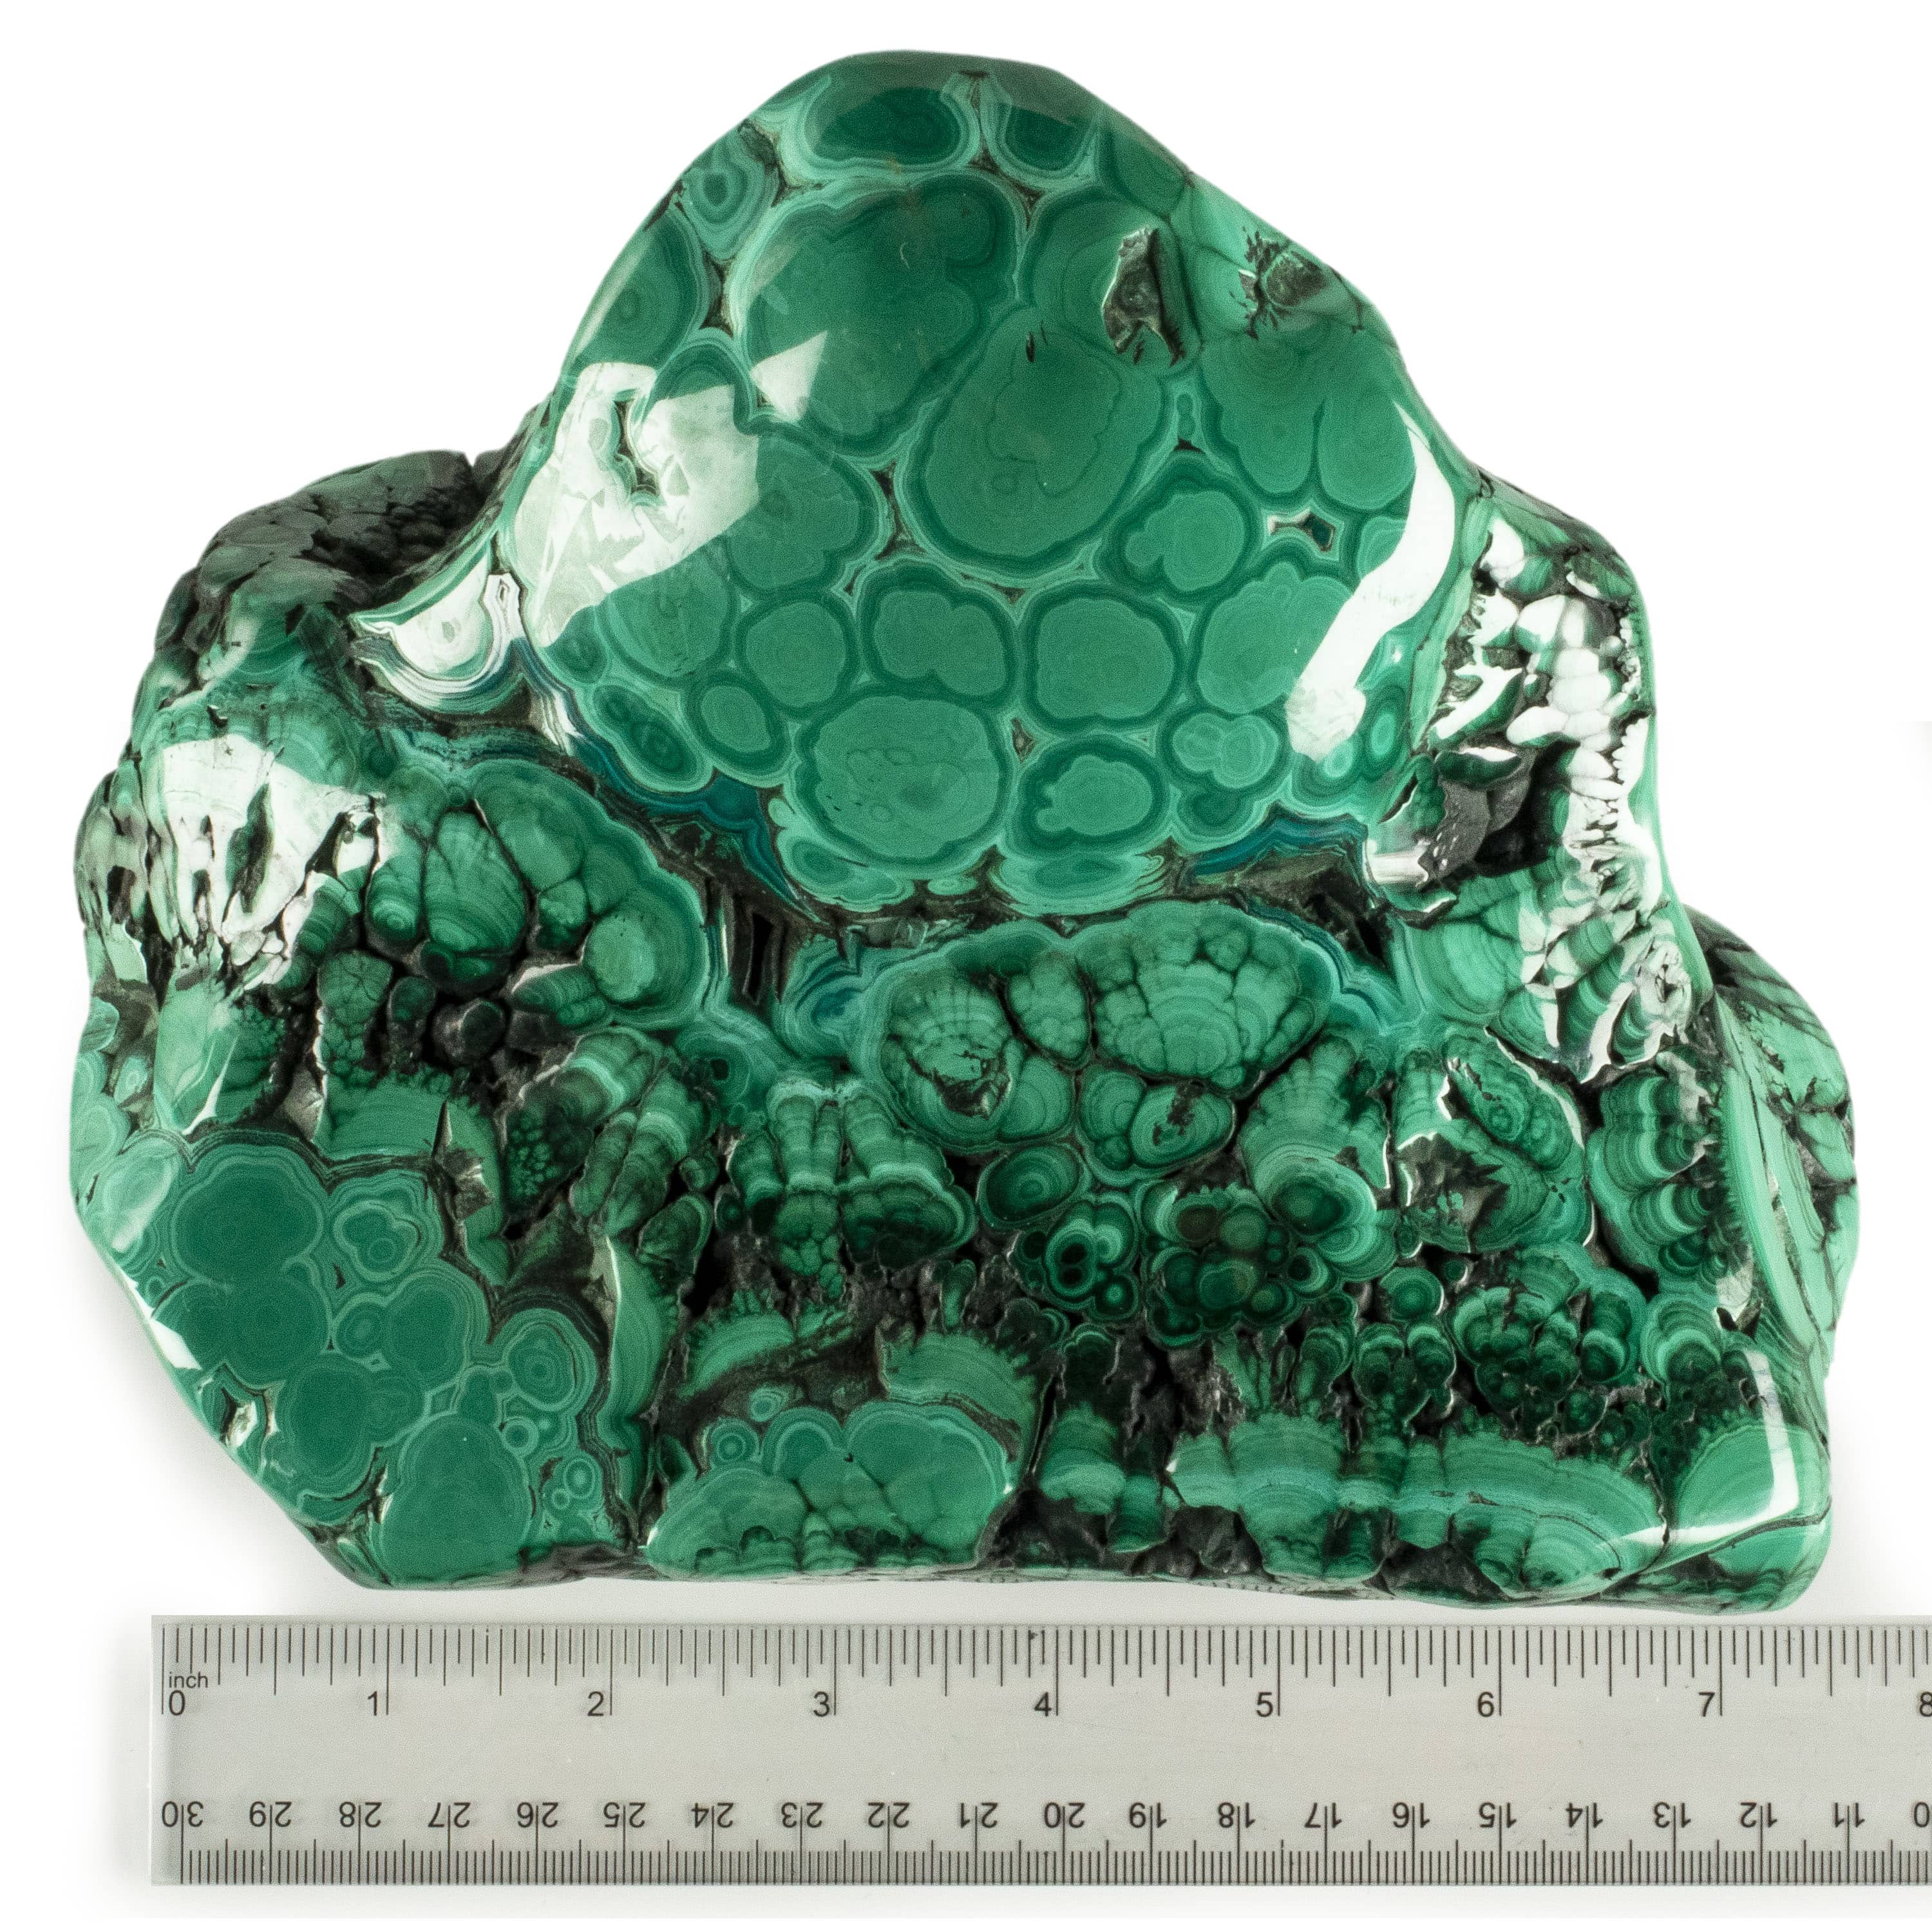 Kalifano Malachite Rare Natural Green Malachite Polished Freeform Specimen from Congo - 5.5 kg / 12.2 lbs MA3600.005